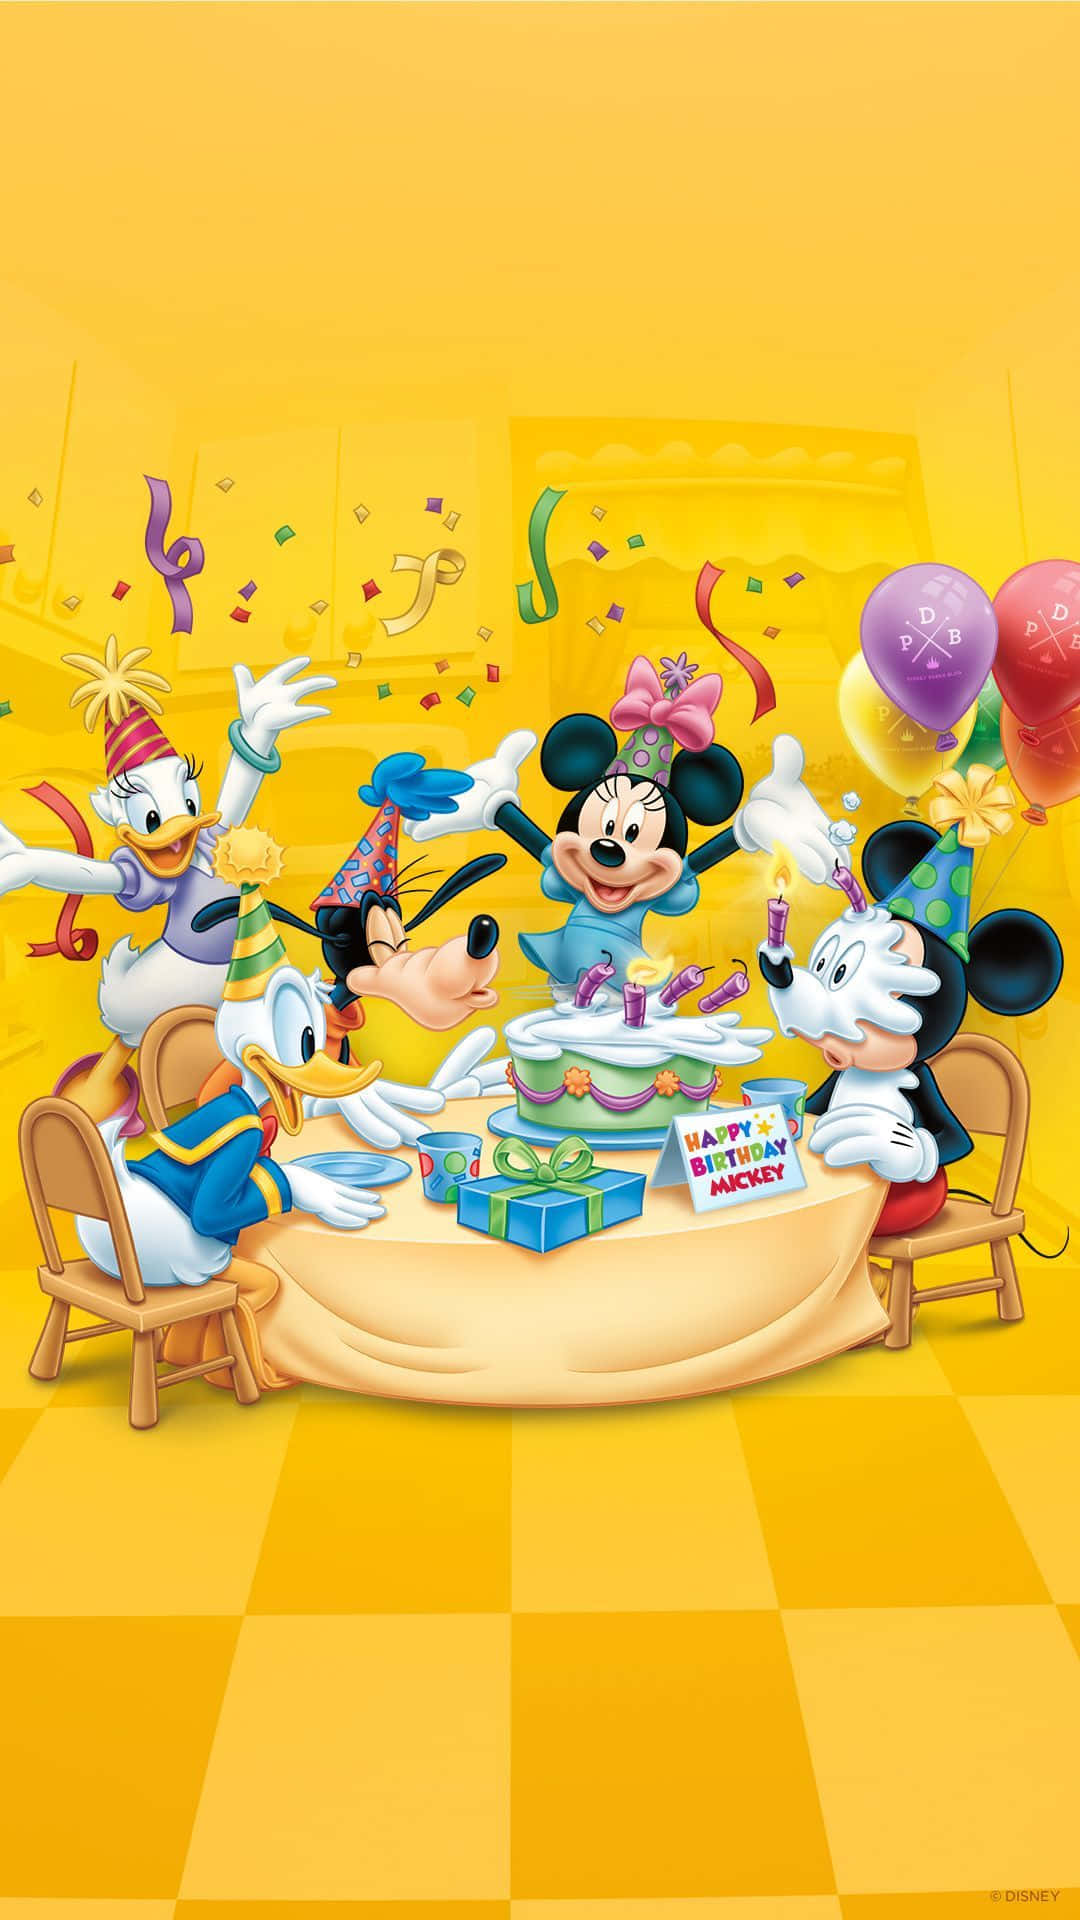 Disney Birthday Wallpaper